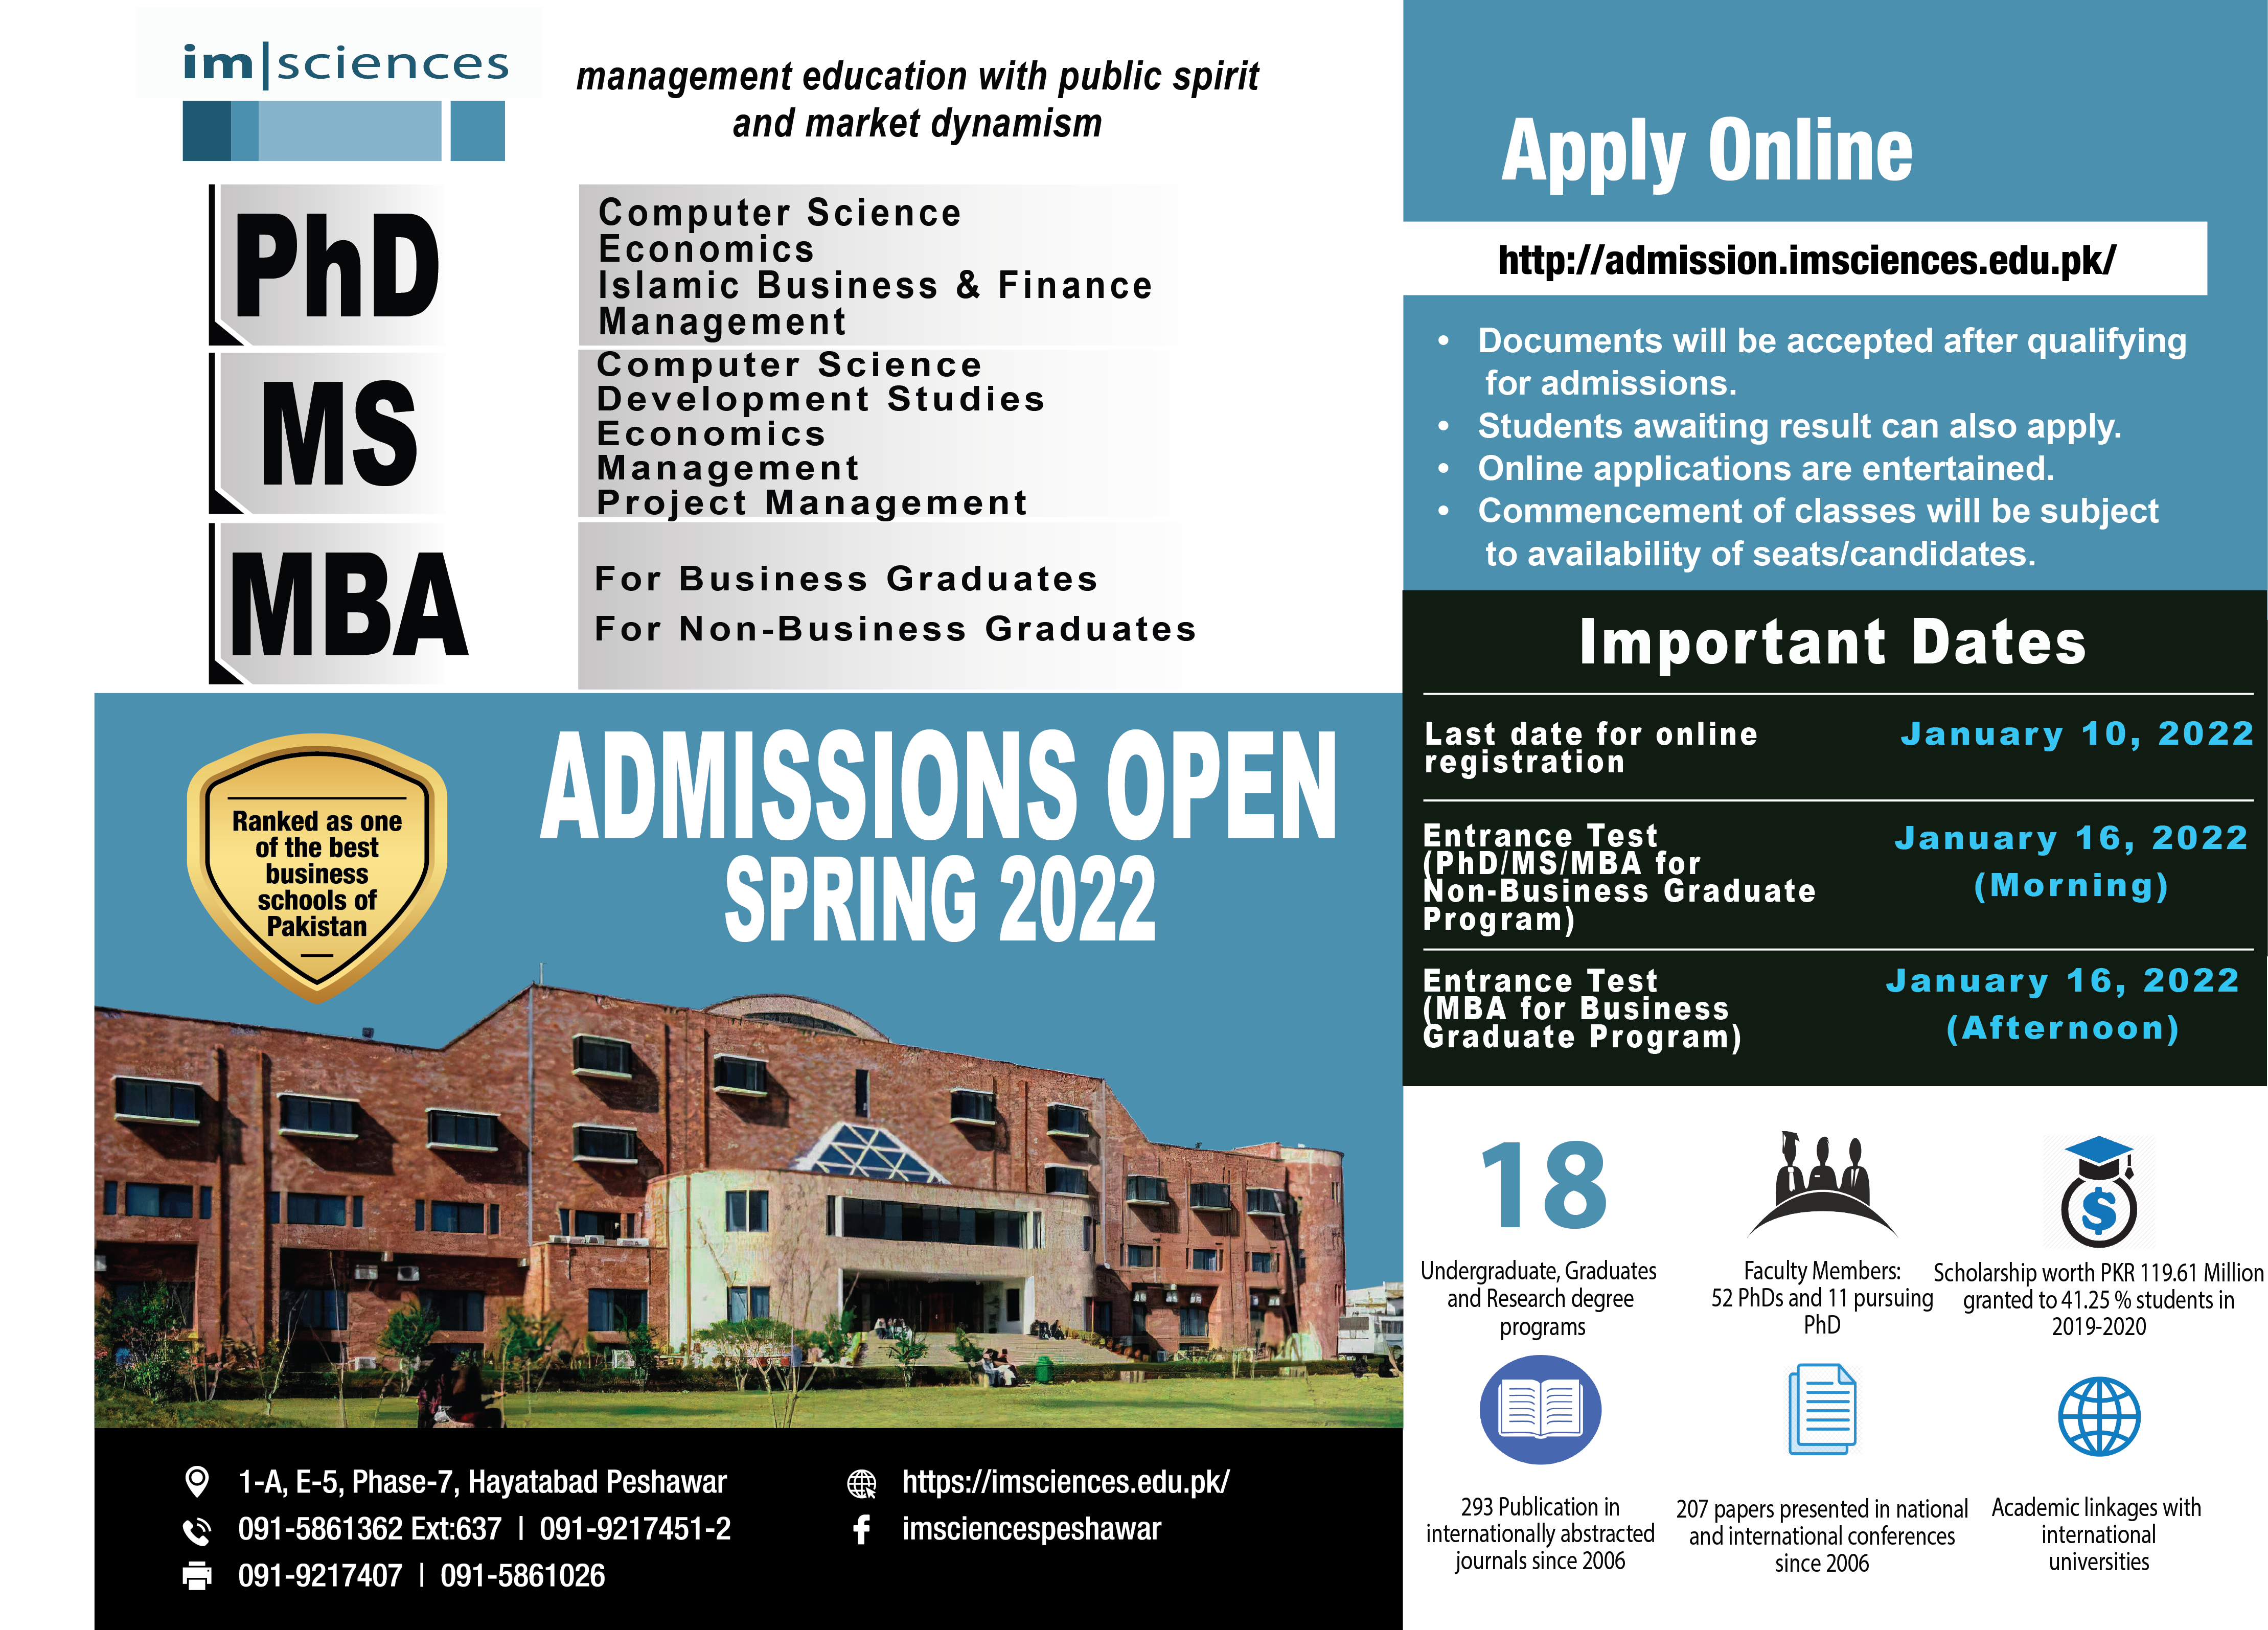 IMSciences Mba Mphil PhD admission advertisement 